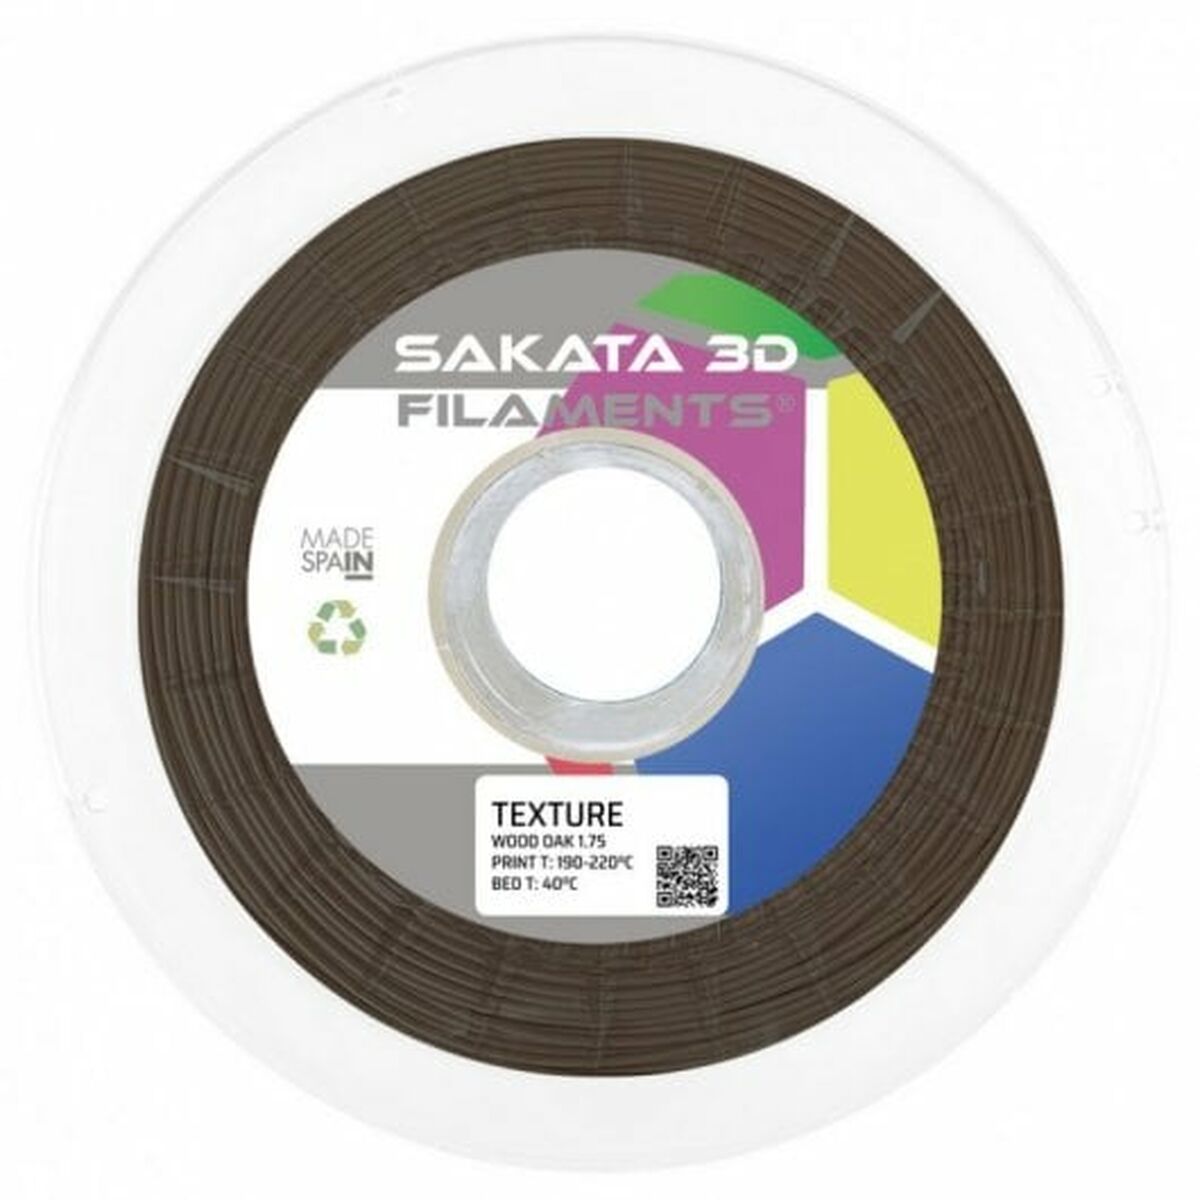 Bobina di Filamento Sakata 3D 10417657 PLA TEXTURE Ø 1,75 mm Marrone